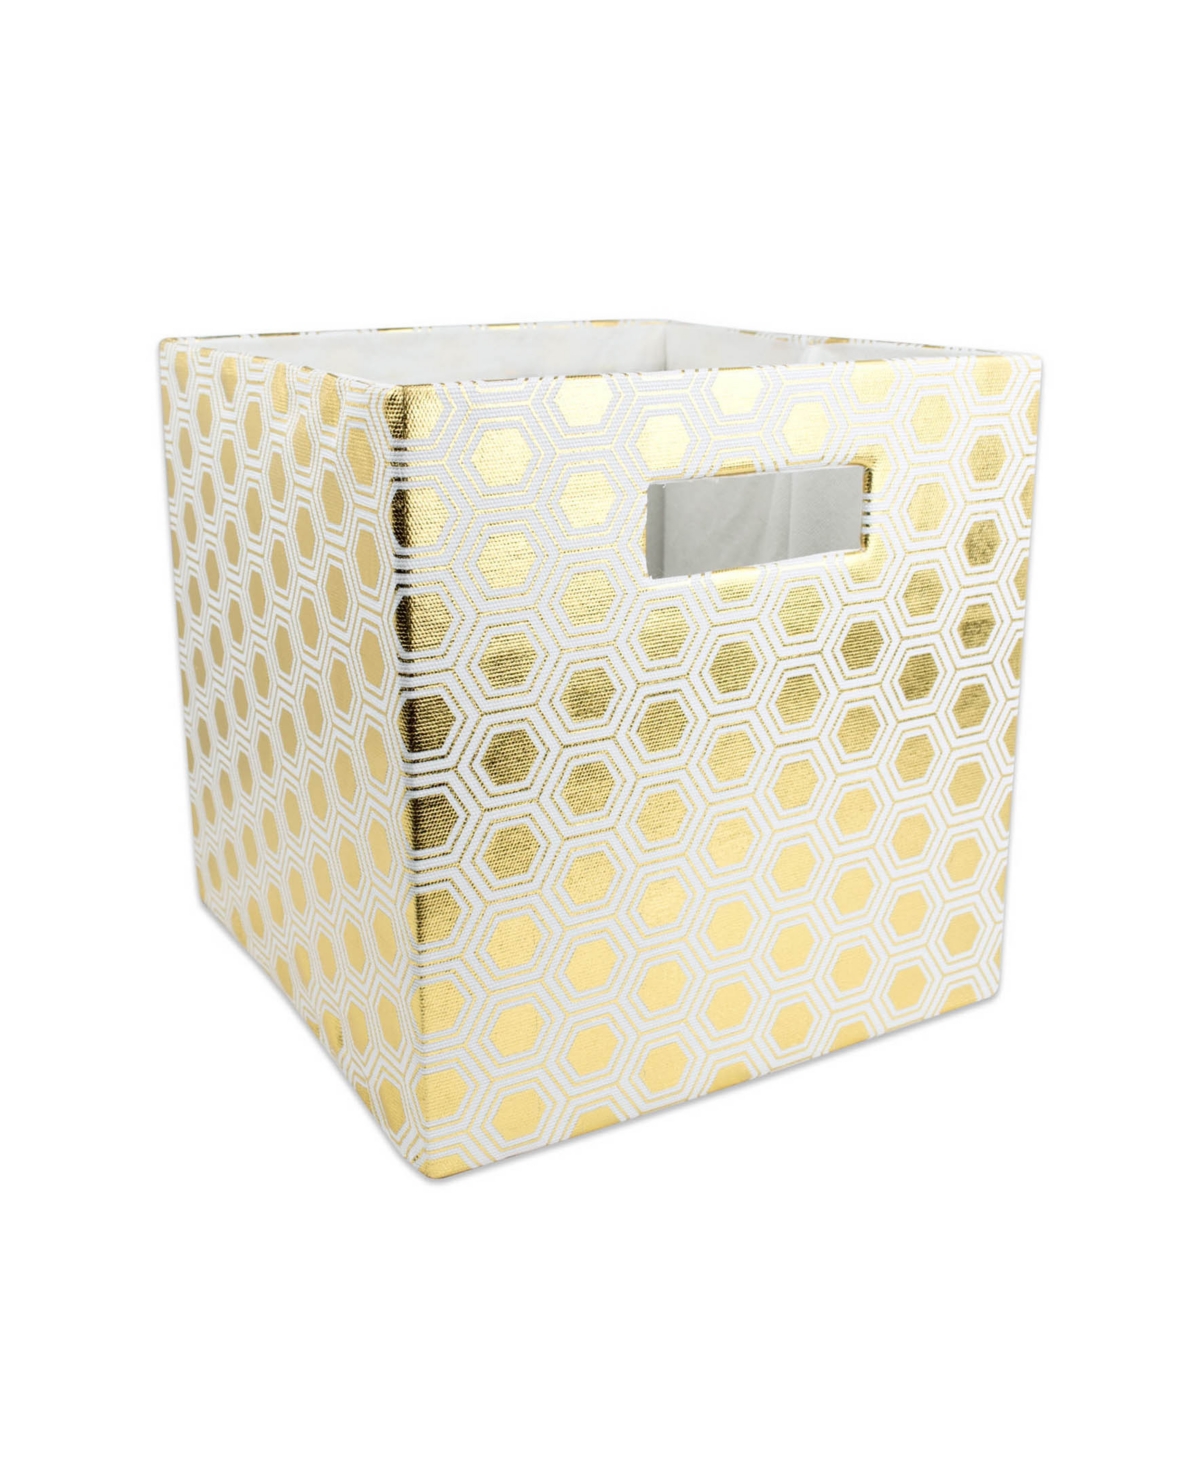 Honeycomb Print Polyester Storage Bin - Gold Honeycomb